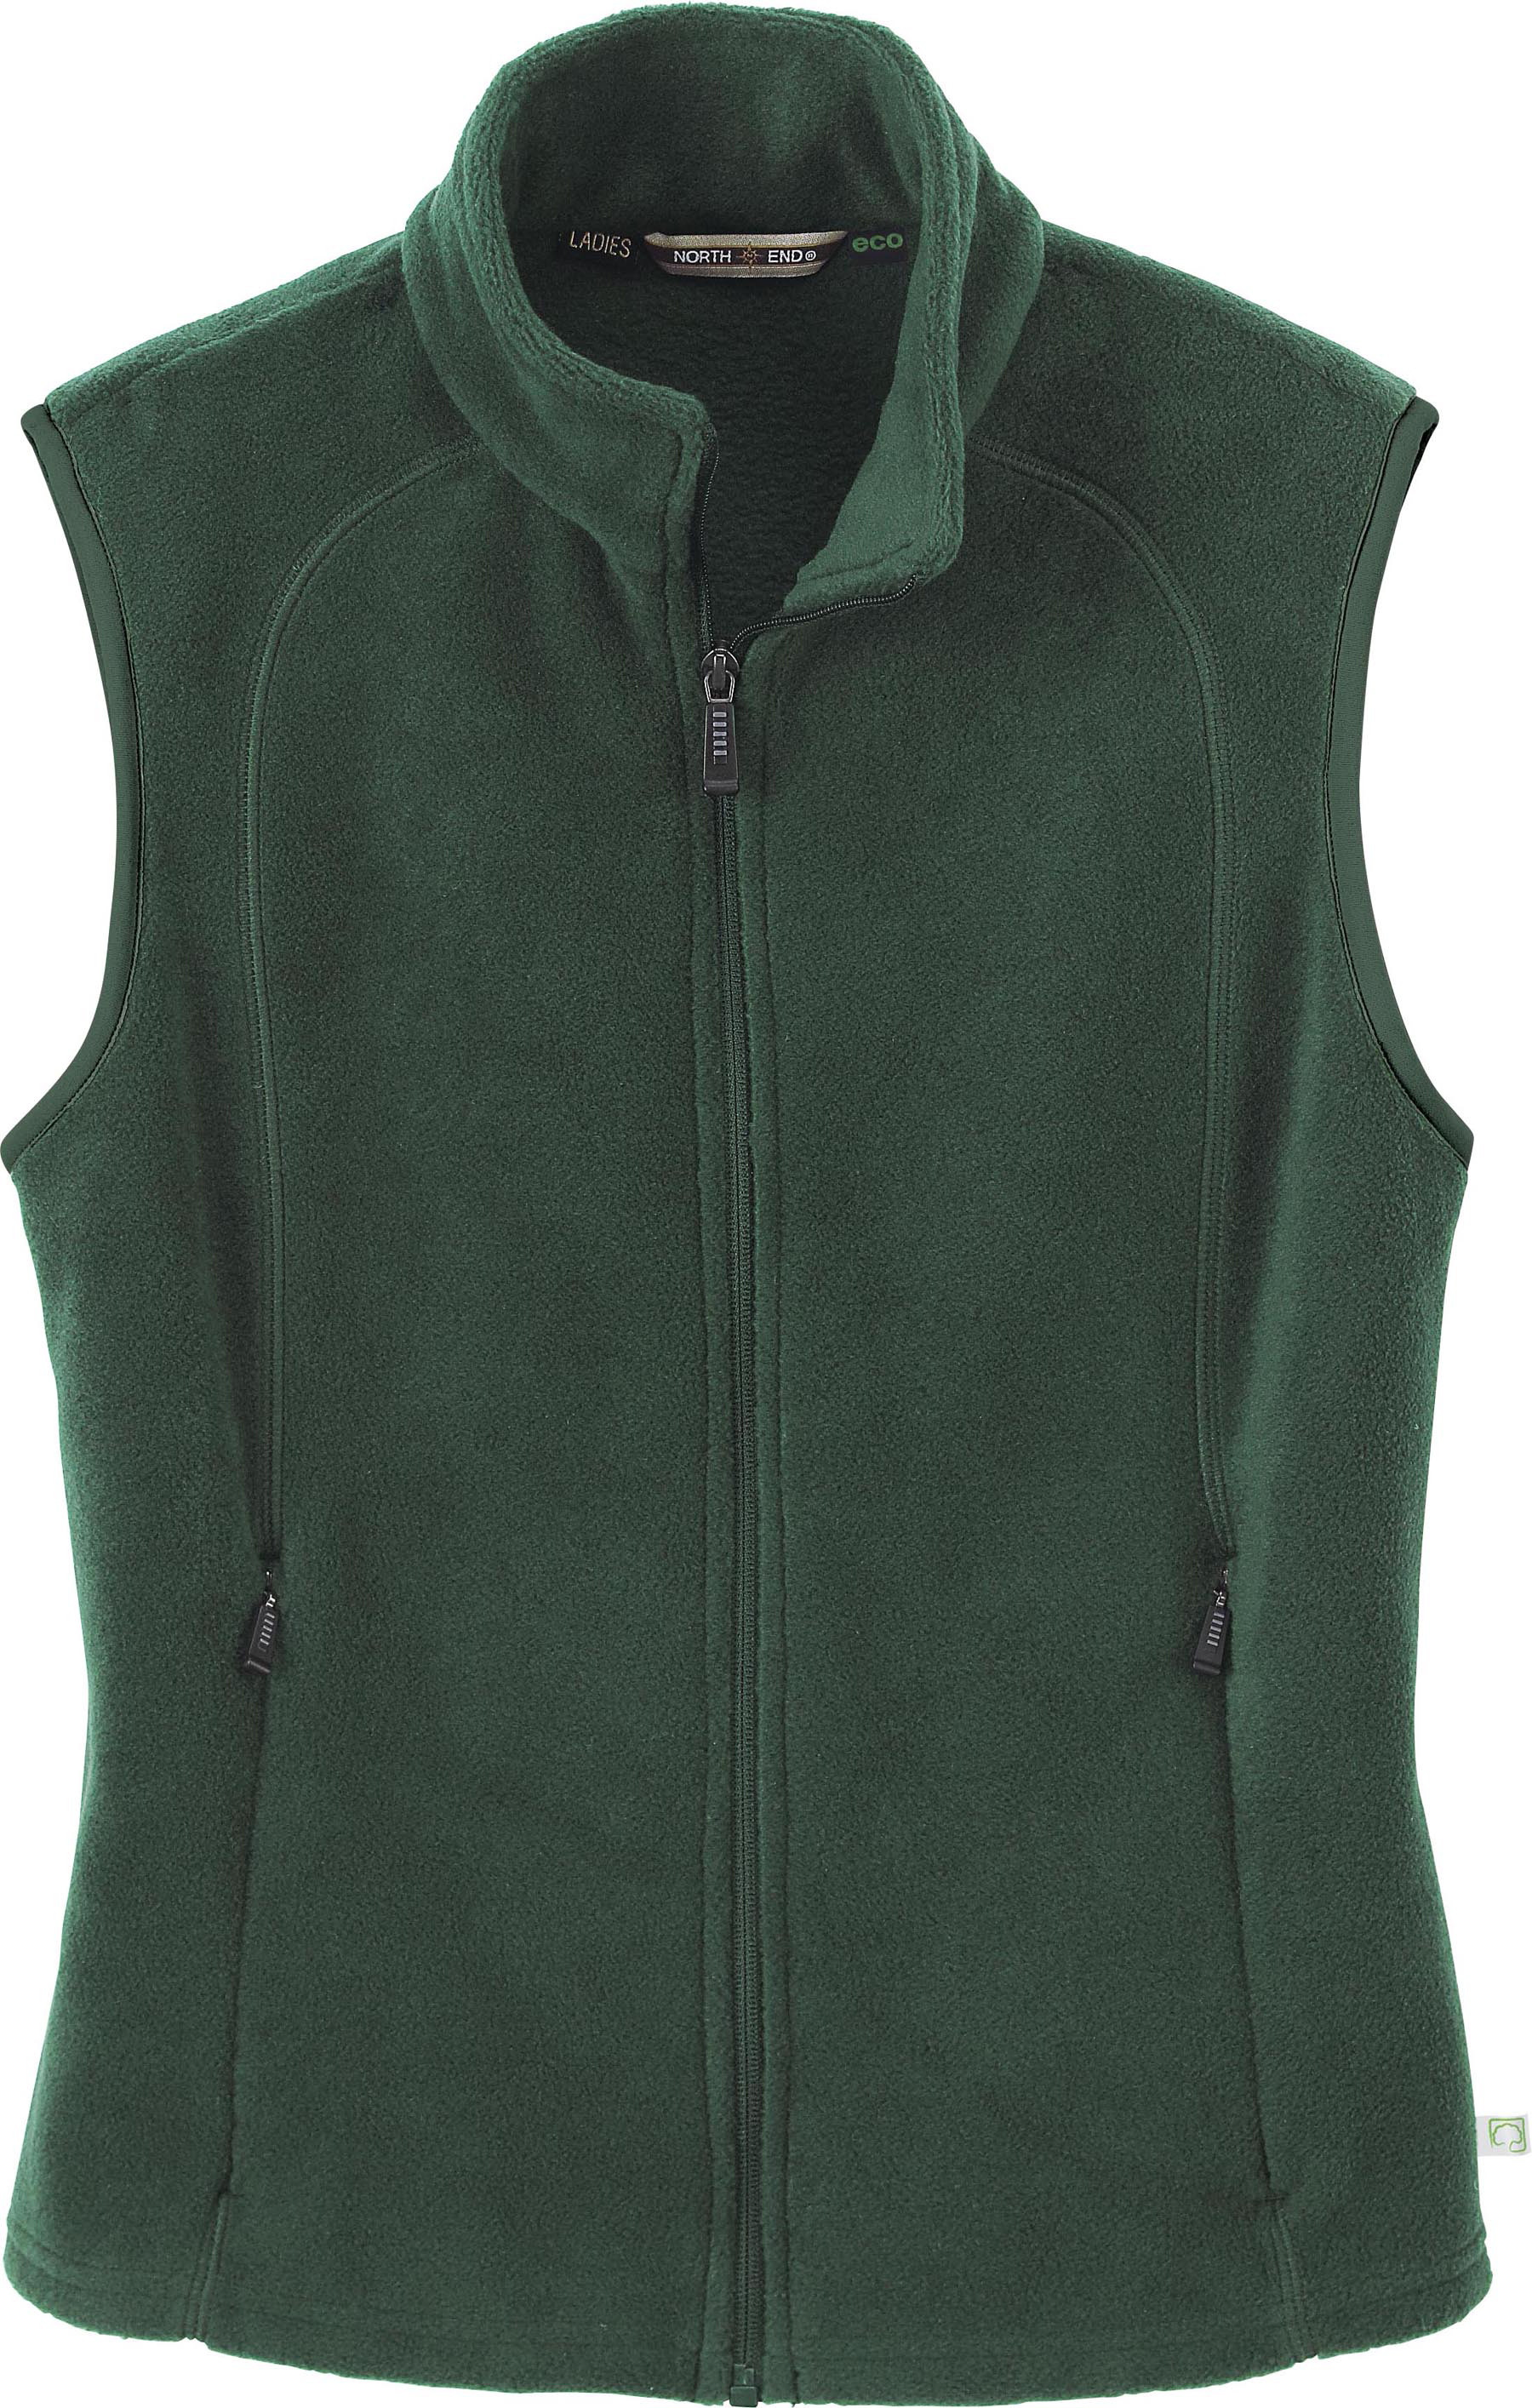 Ash City e.c.o Fleece 78063 - Ladies' Recycled Fleece Full-Zip Vest